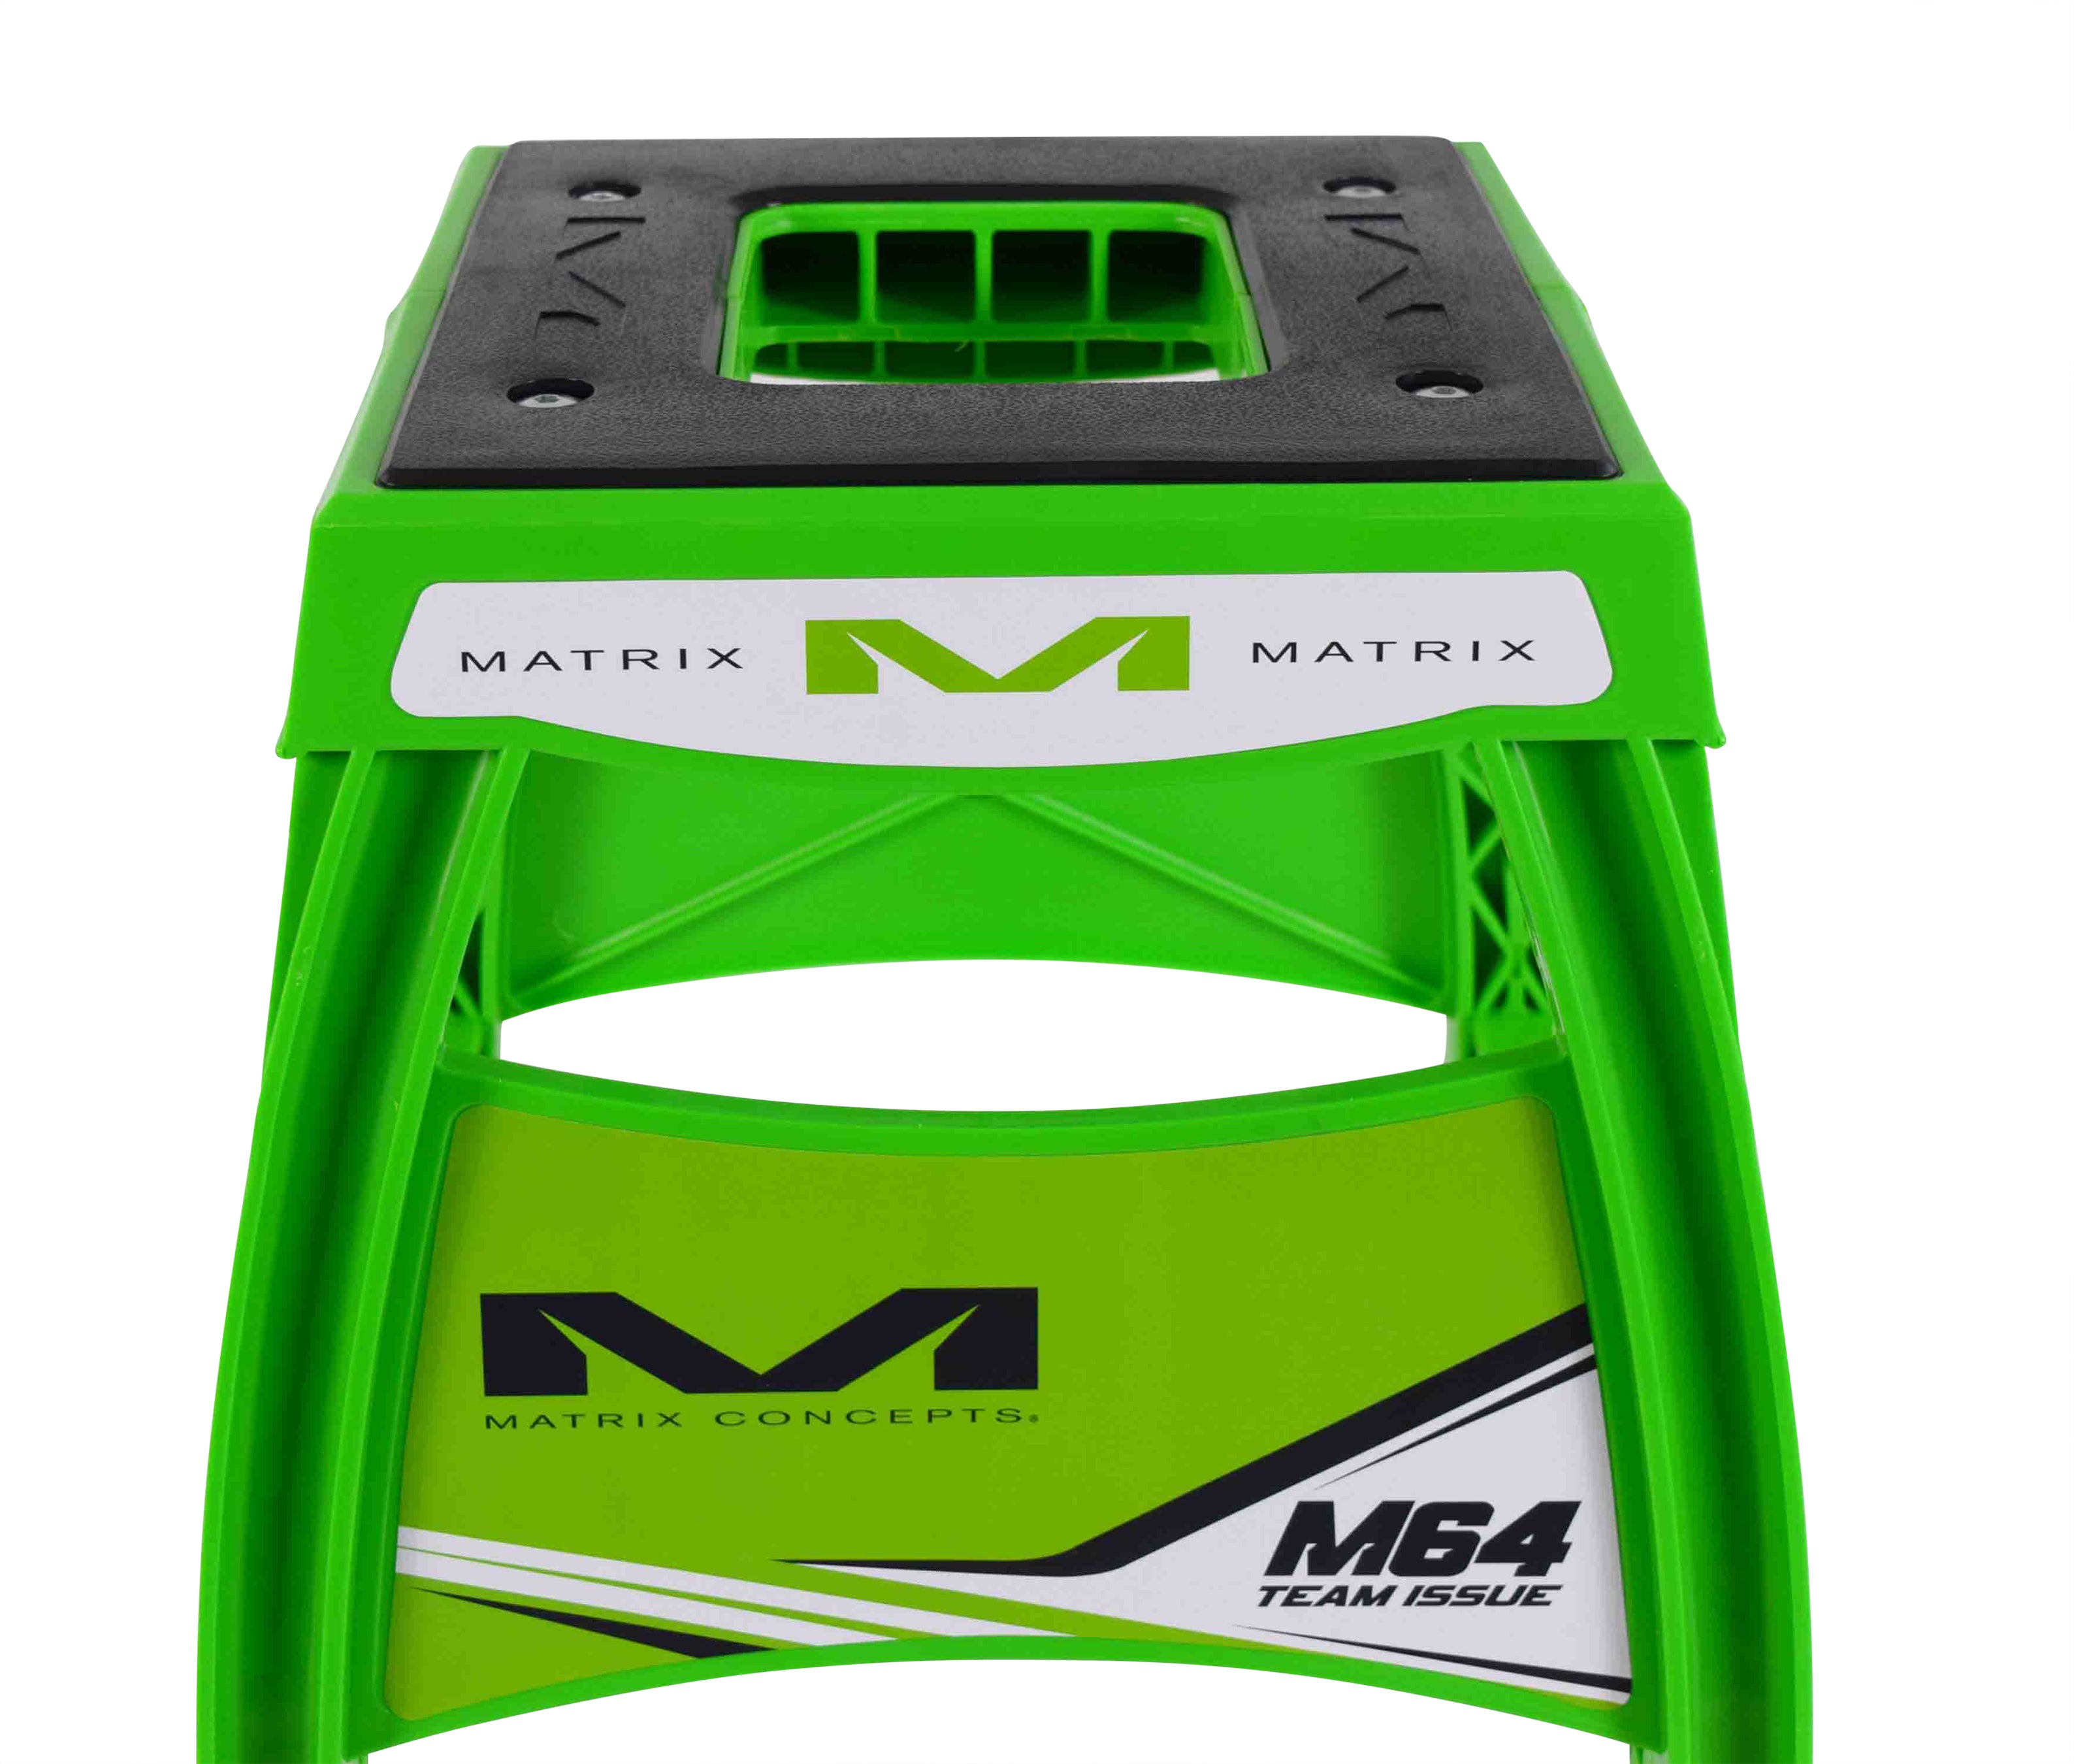 Matrix Concepts M64 Elite Stand - Green